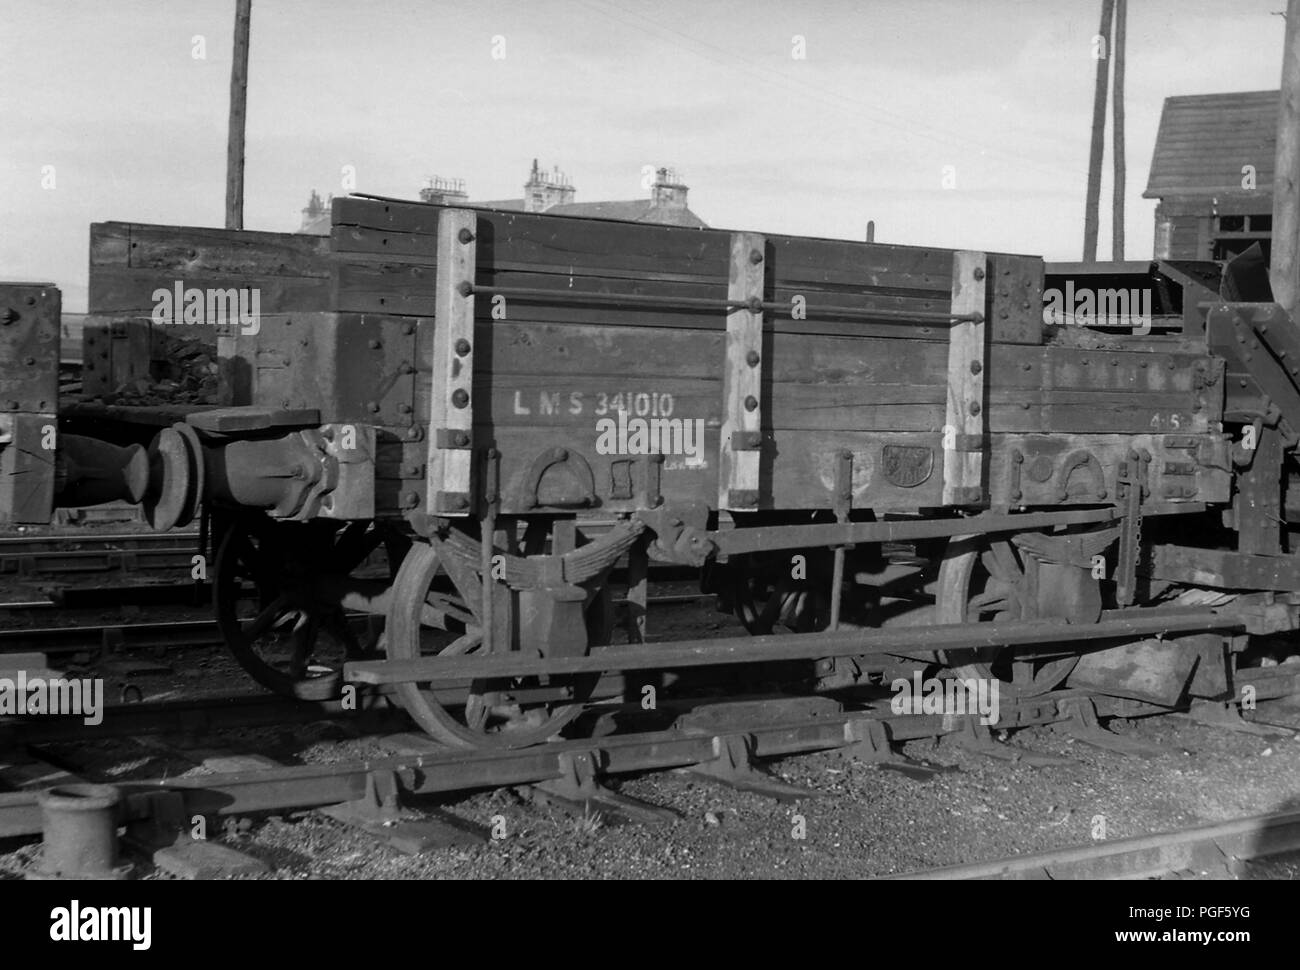 Caledonian carro ferroviario gara per 0-4-0ST pug locomotiva a vapore come LMS 34010 Foto Stock